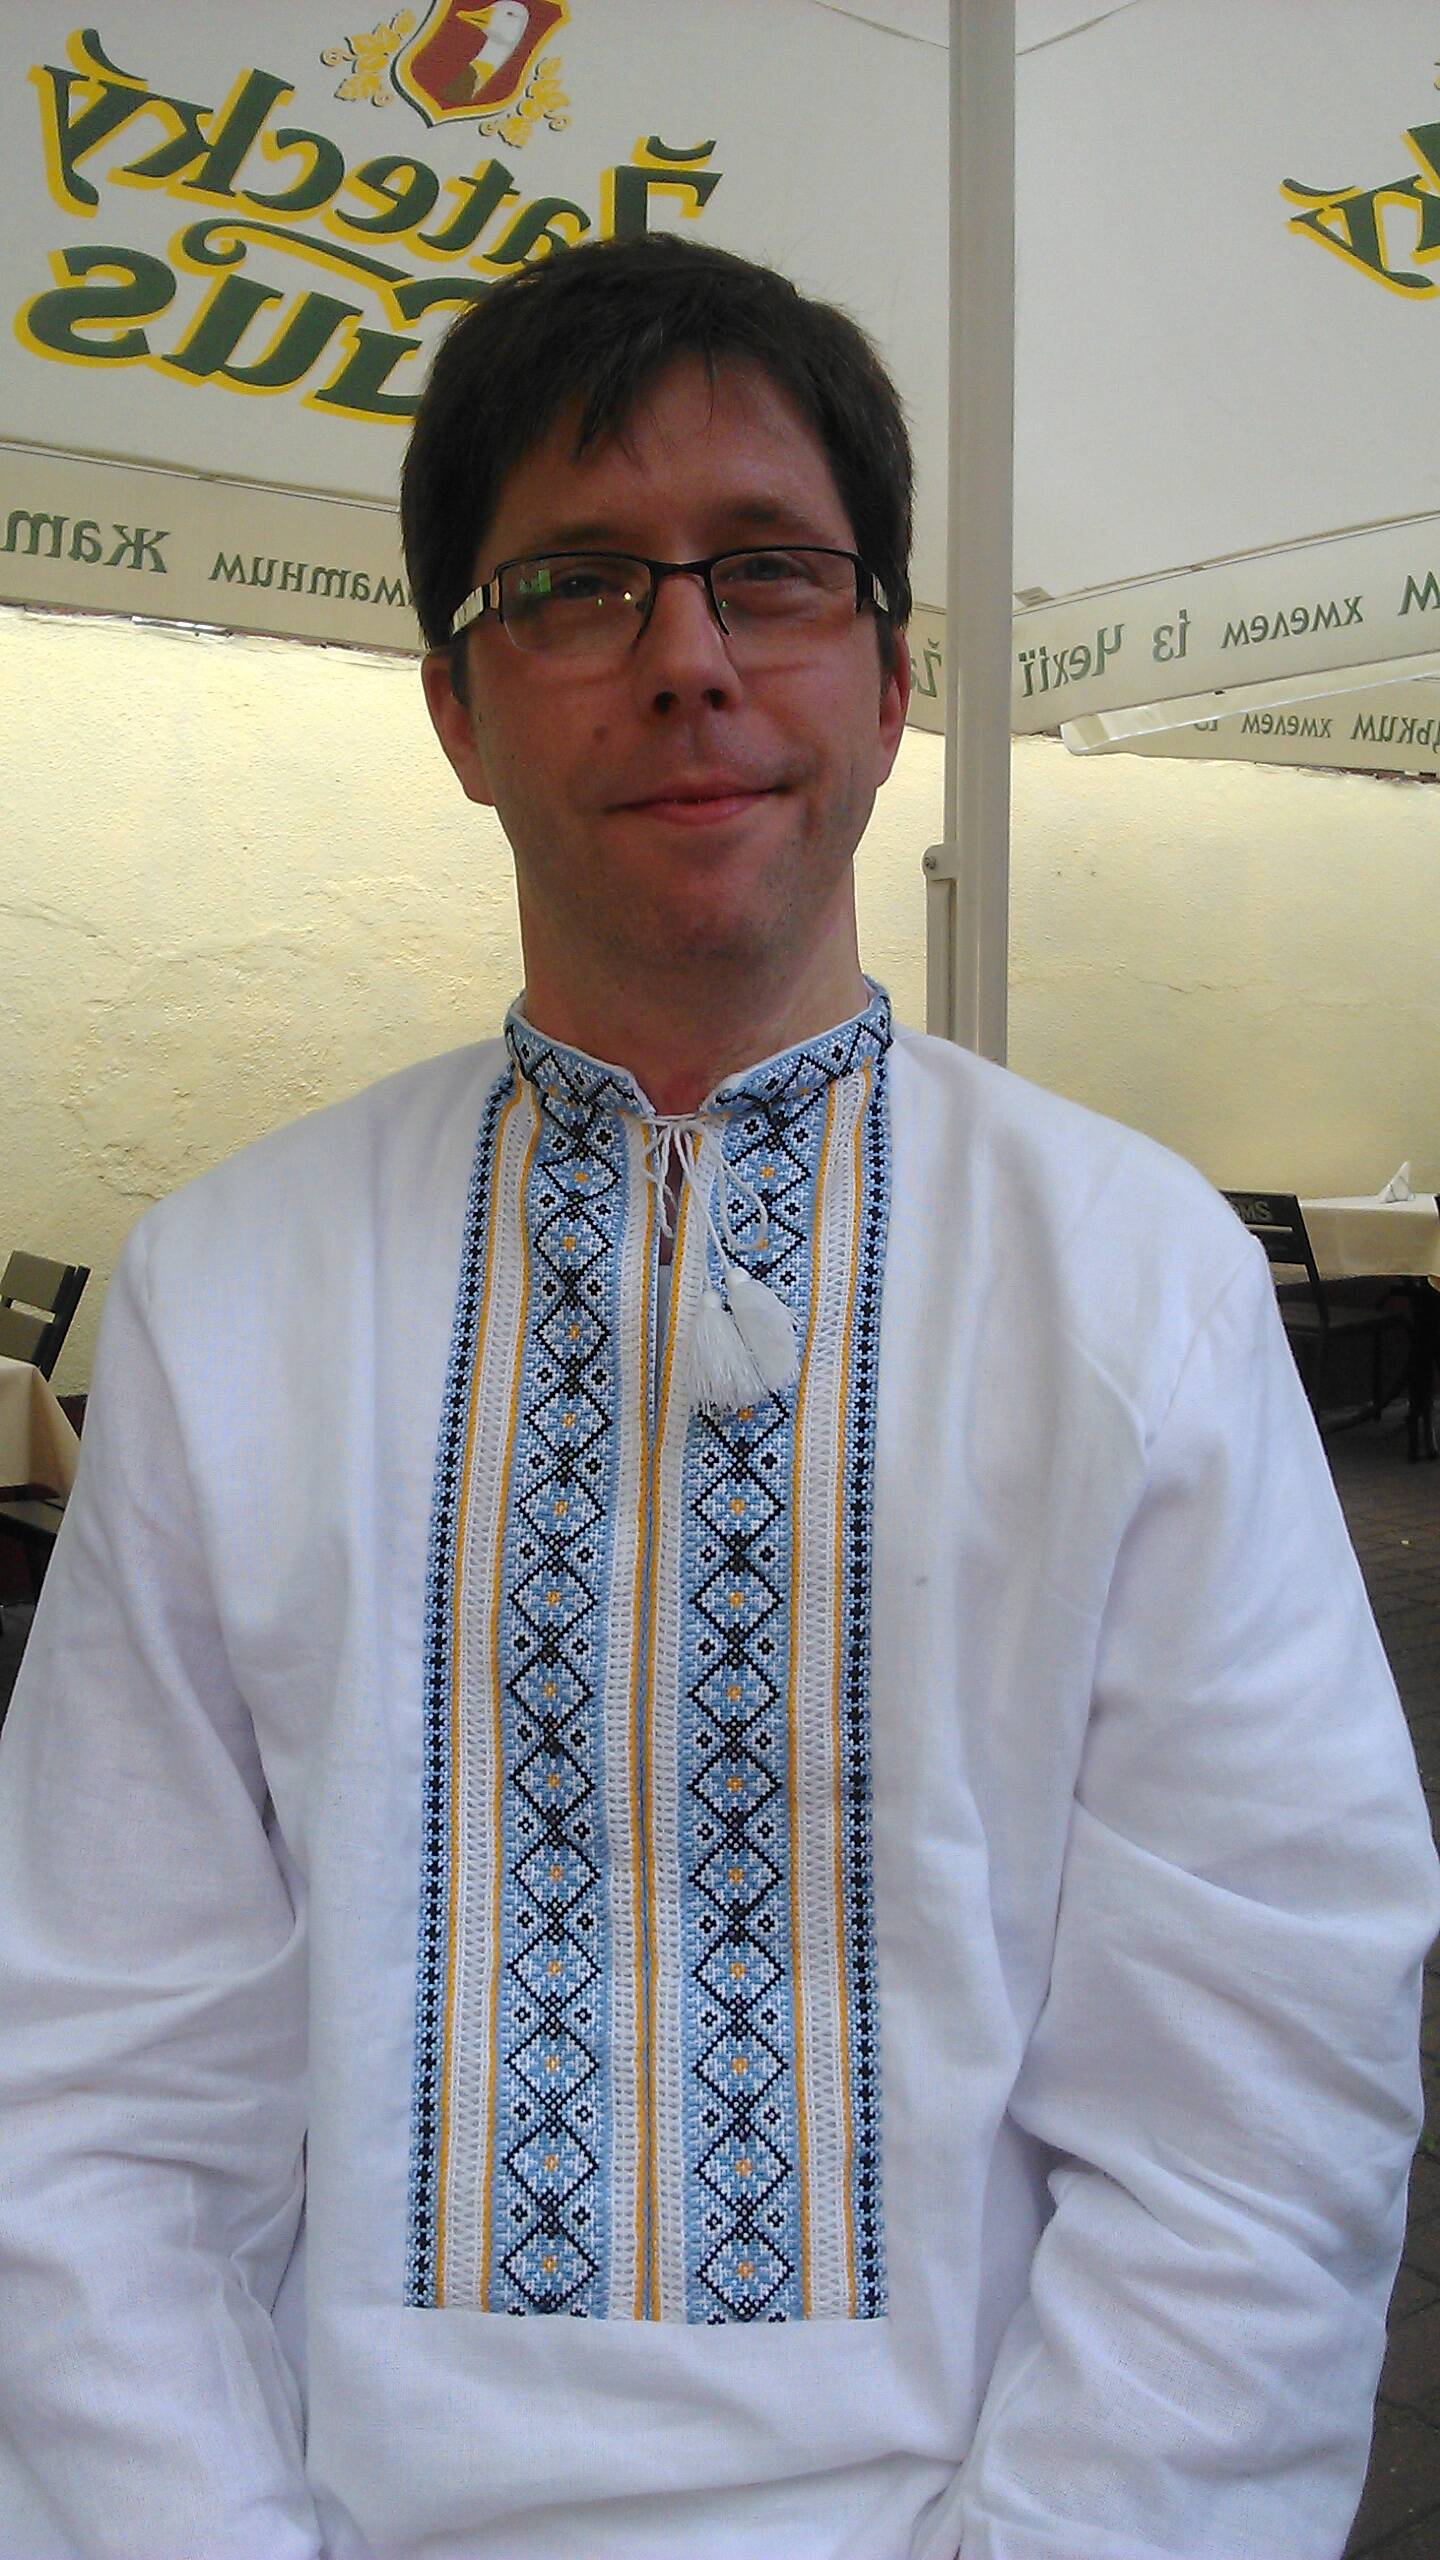 Jeffrey Groton wears a vyshyvanka, a traditional Ukrainian folk shirt. (Photo provided)